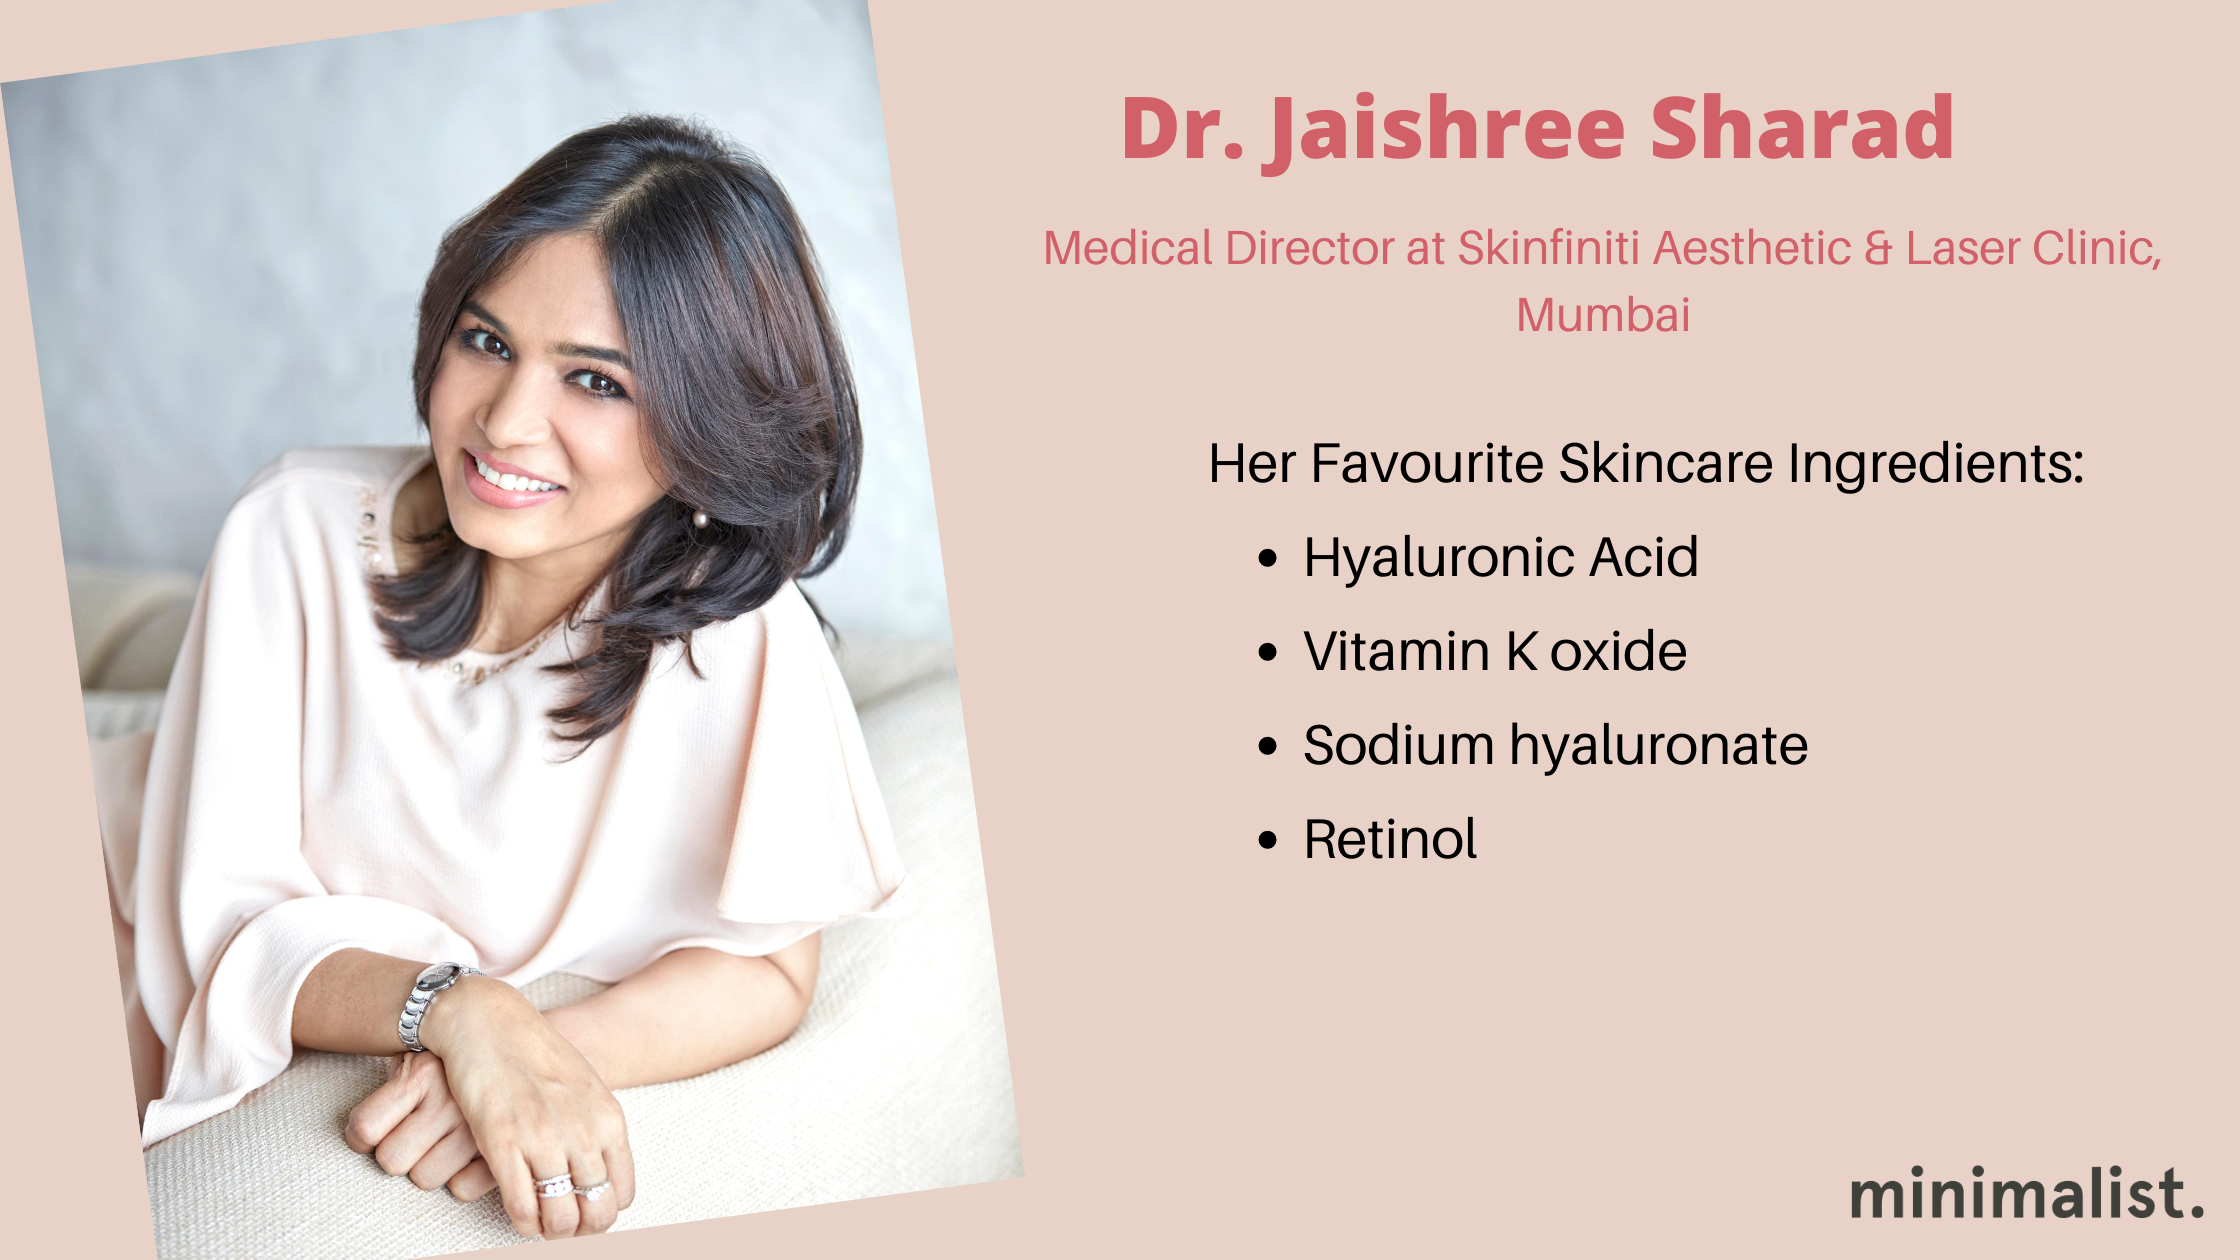 Dr. Jaishree Sharad